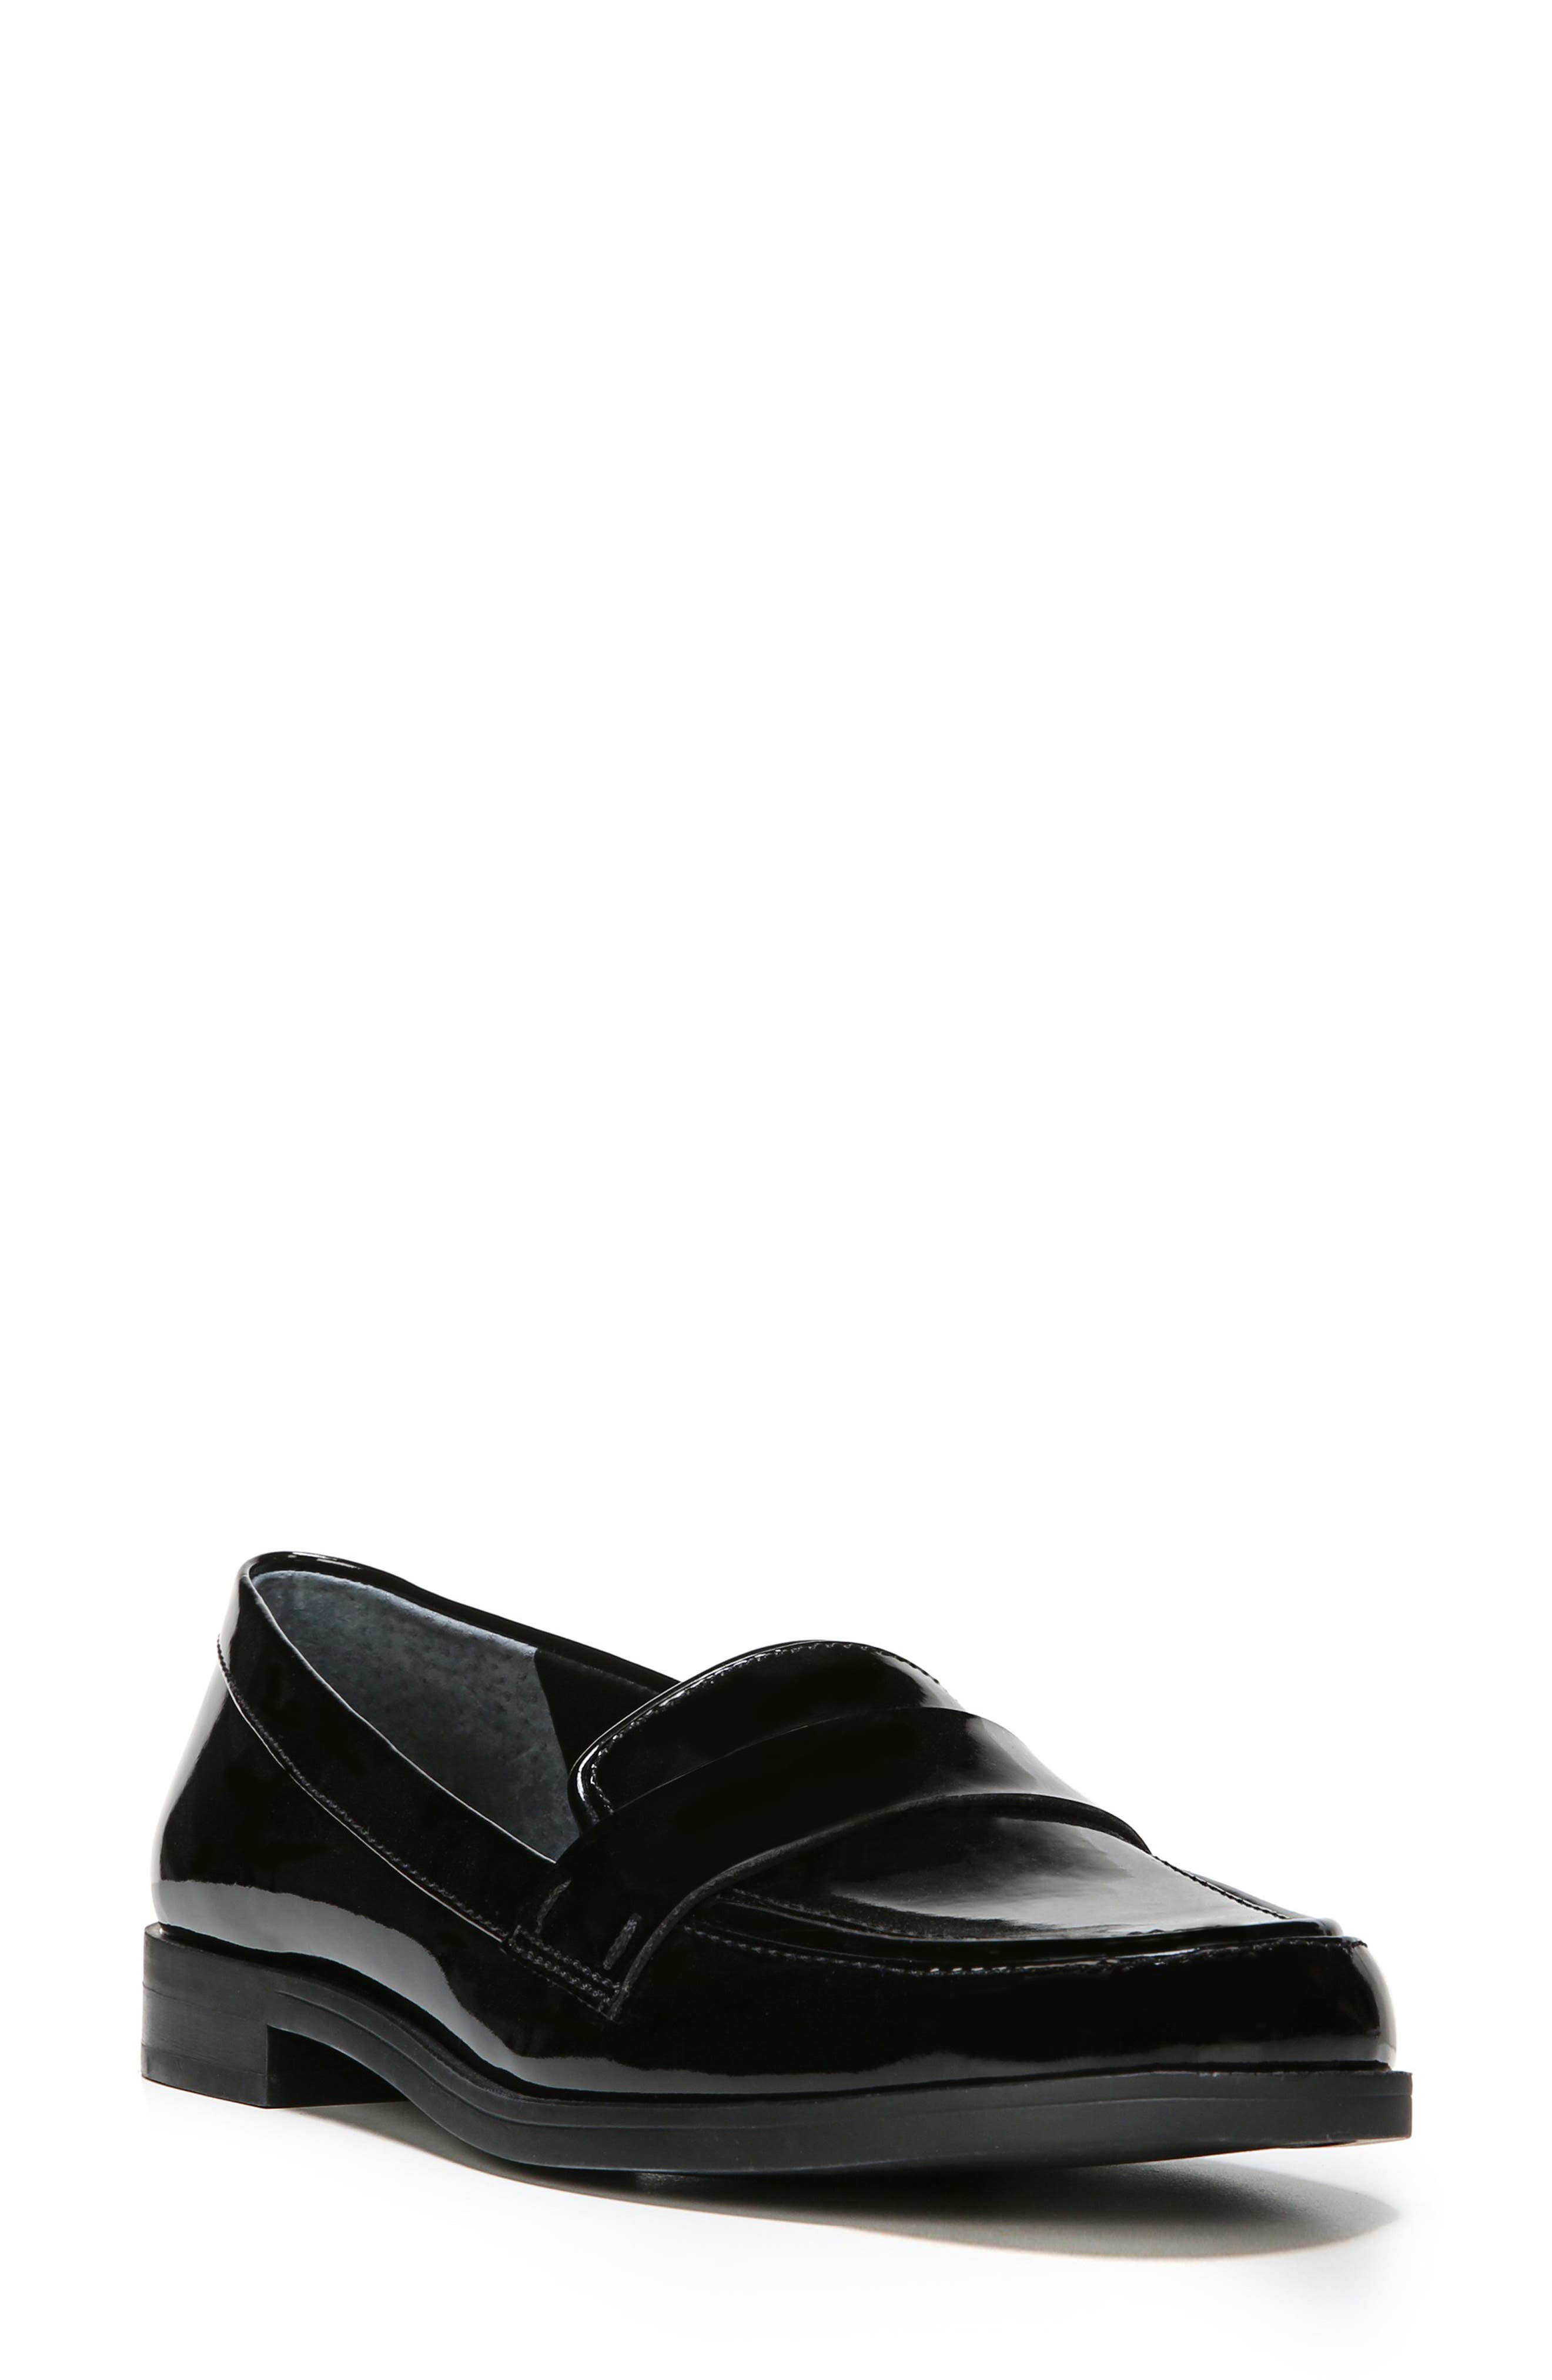 UPC 093638671568 product image for Women's Franco Sarto Valera Loafer, Size 8 M - Black | upcitemdb.com